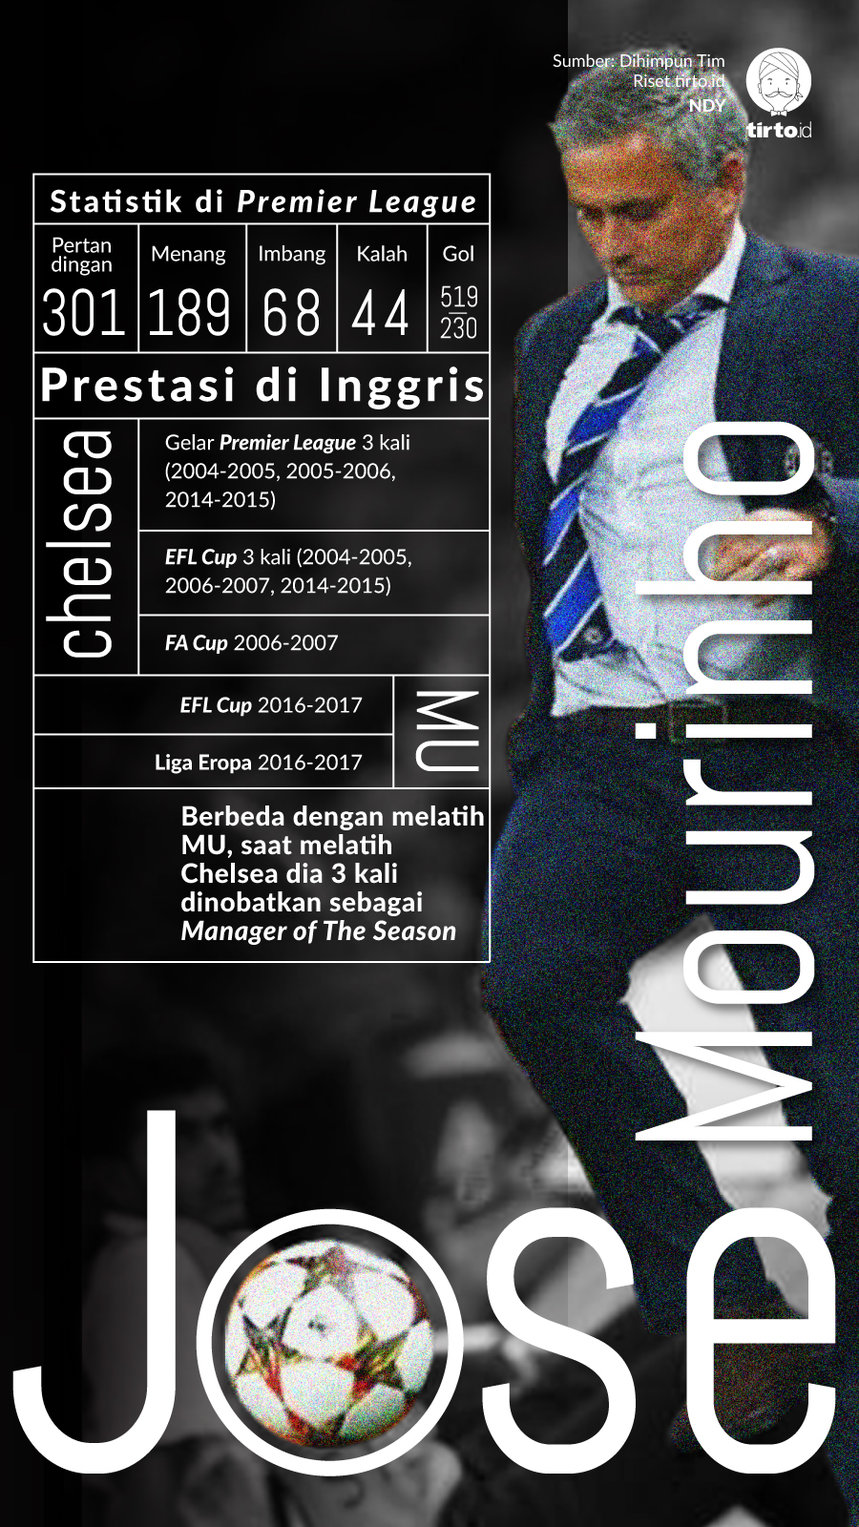 Infografik Jose Mourinho